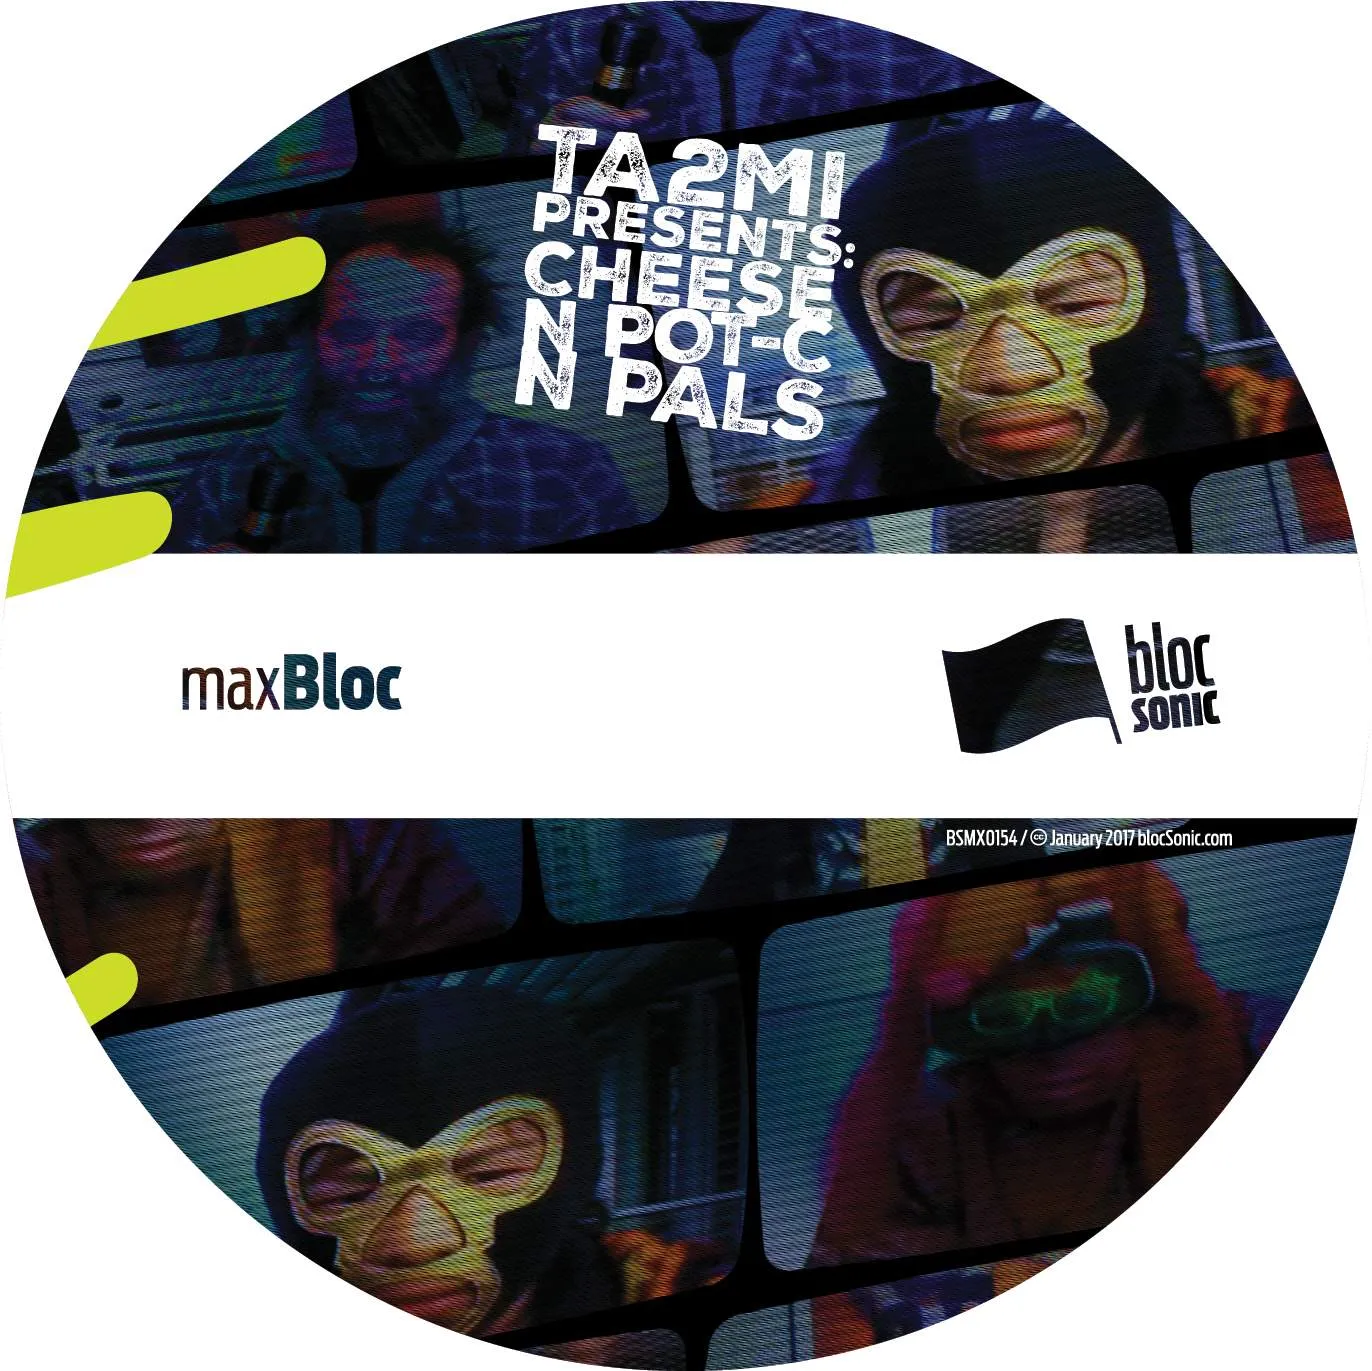 Album disc for “TA2MI Presents: Cheese N Pot-C N Pals” by Cheese N Pot-C